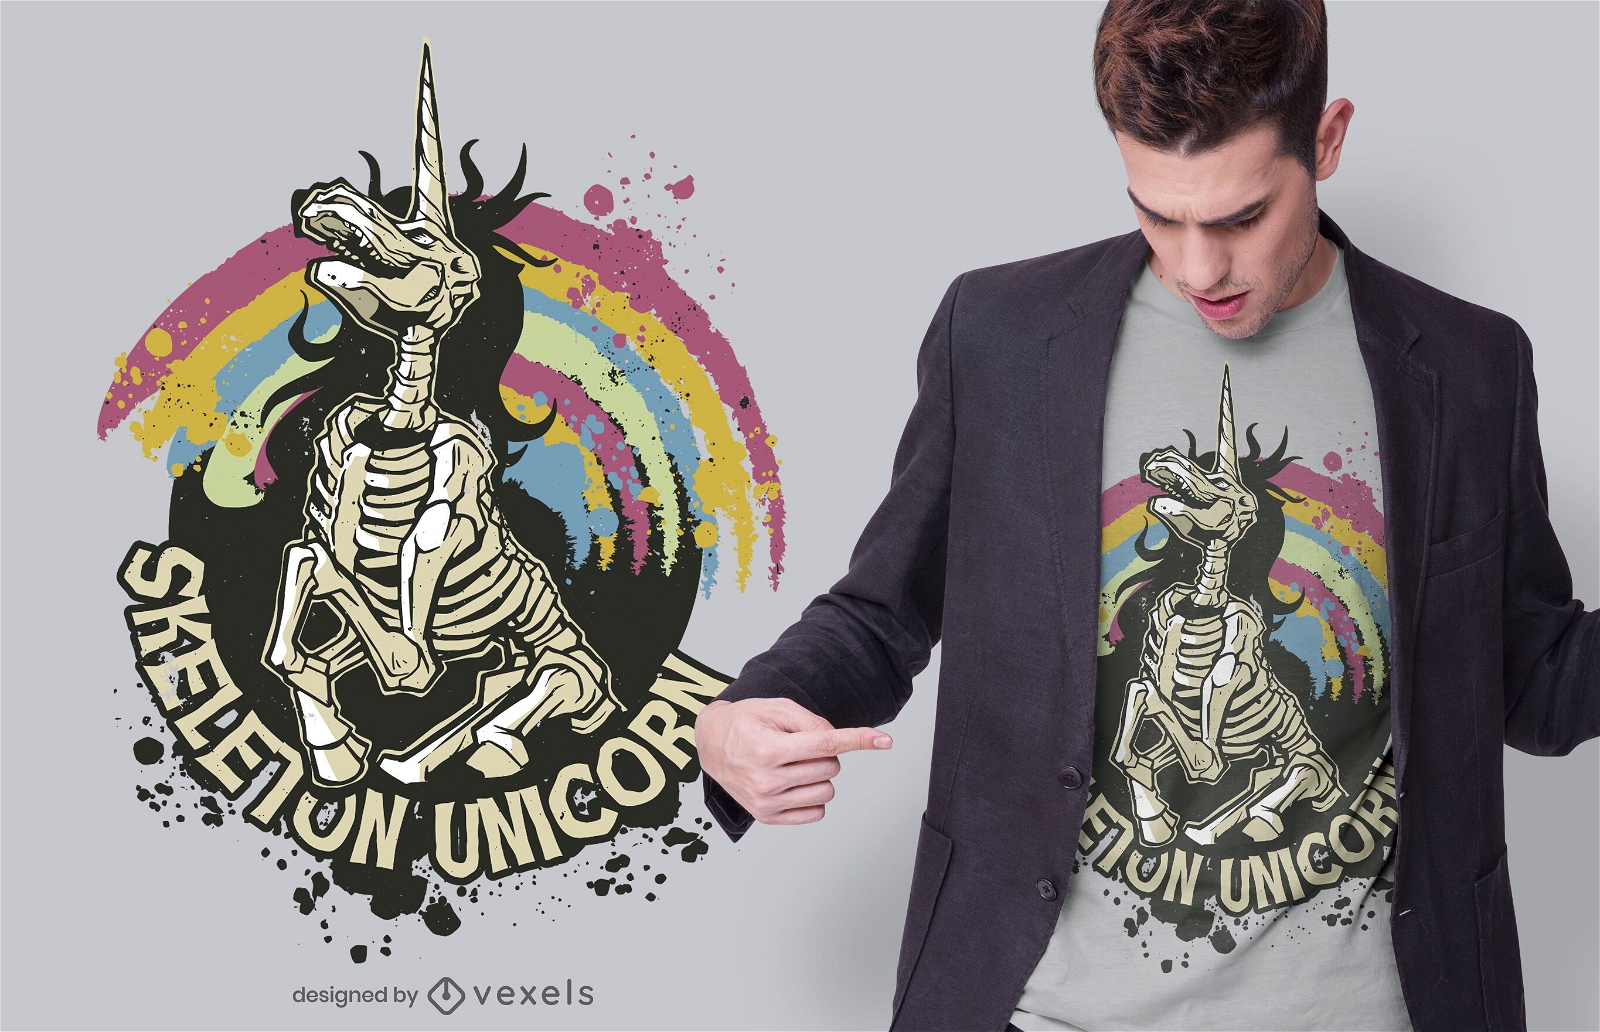 Skeleton unicorn t-shirt design